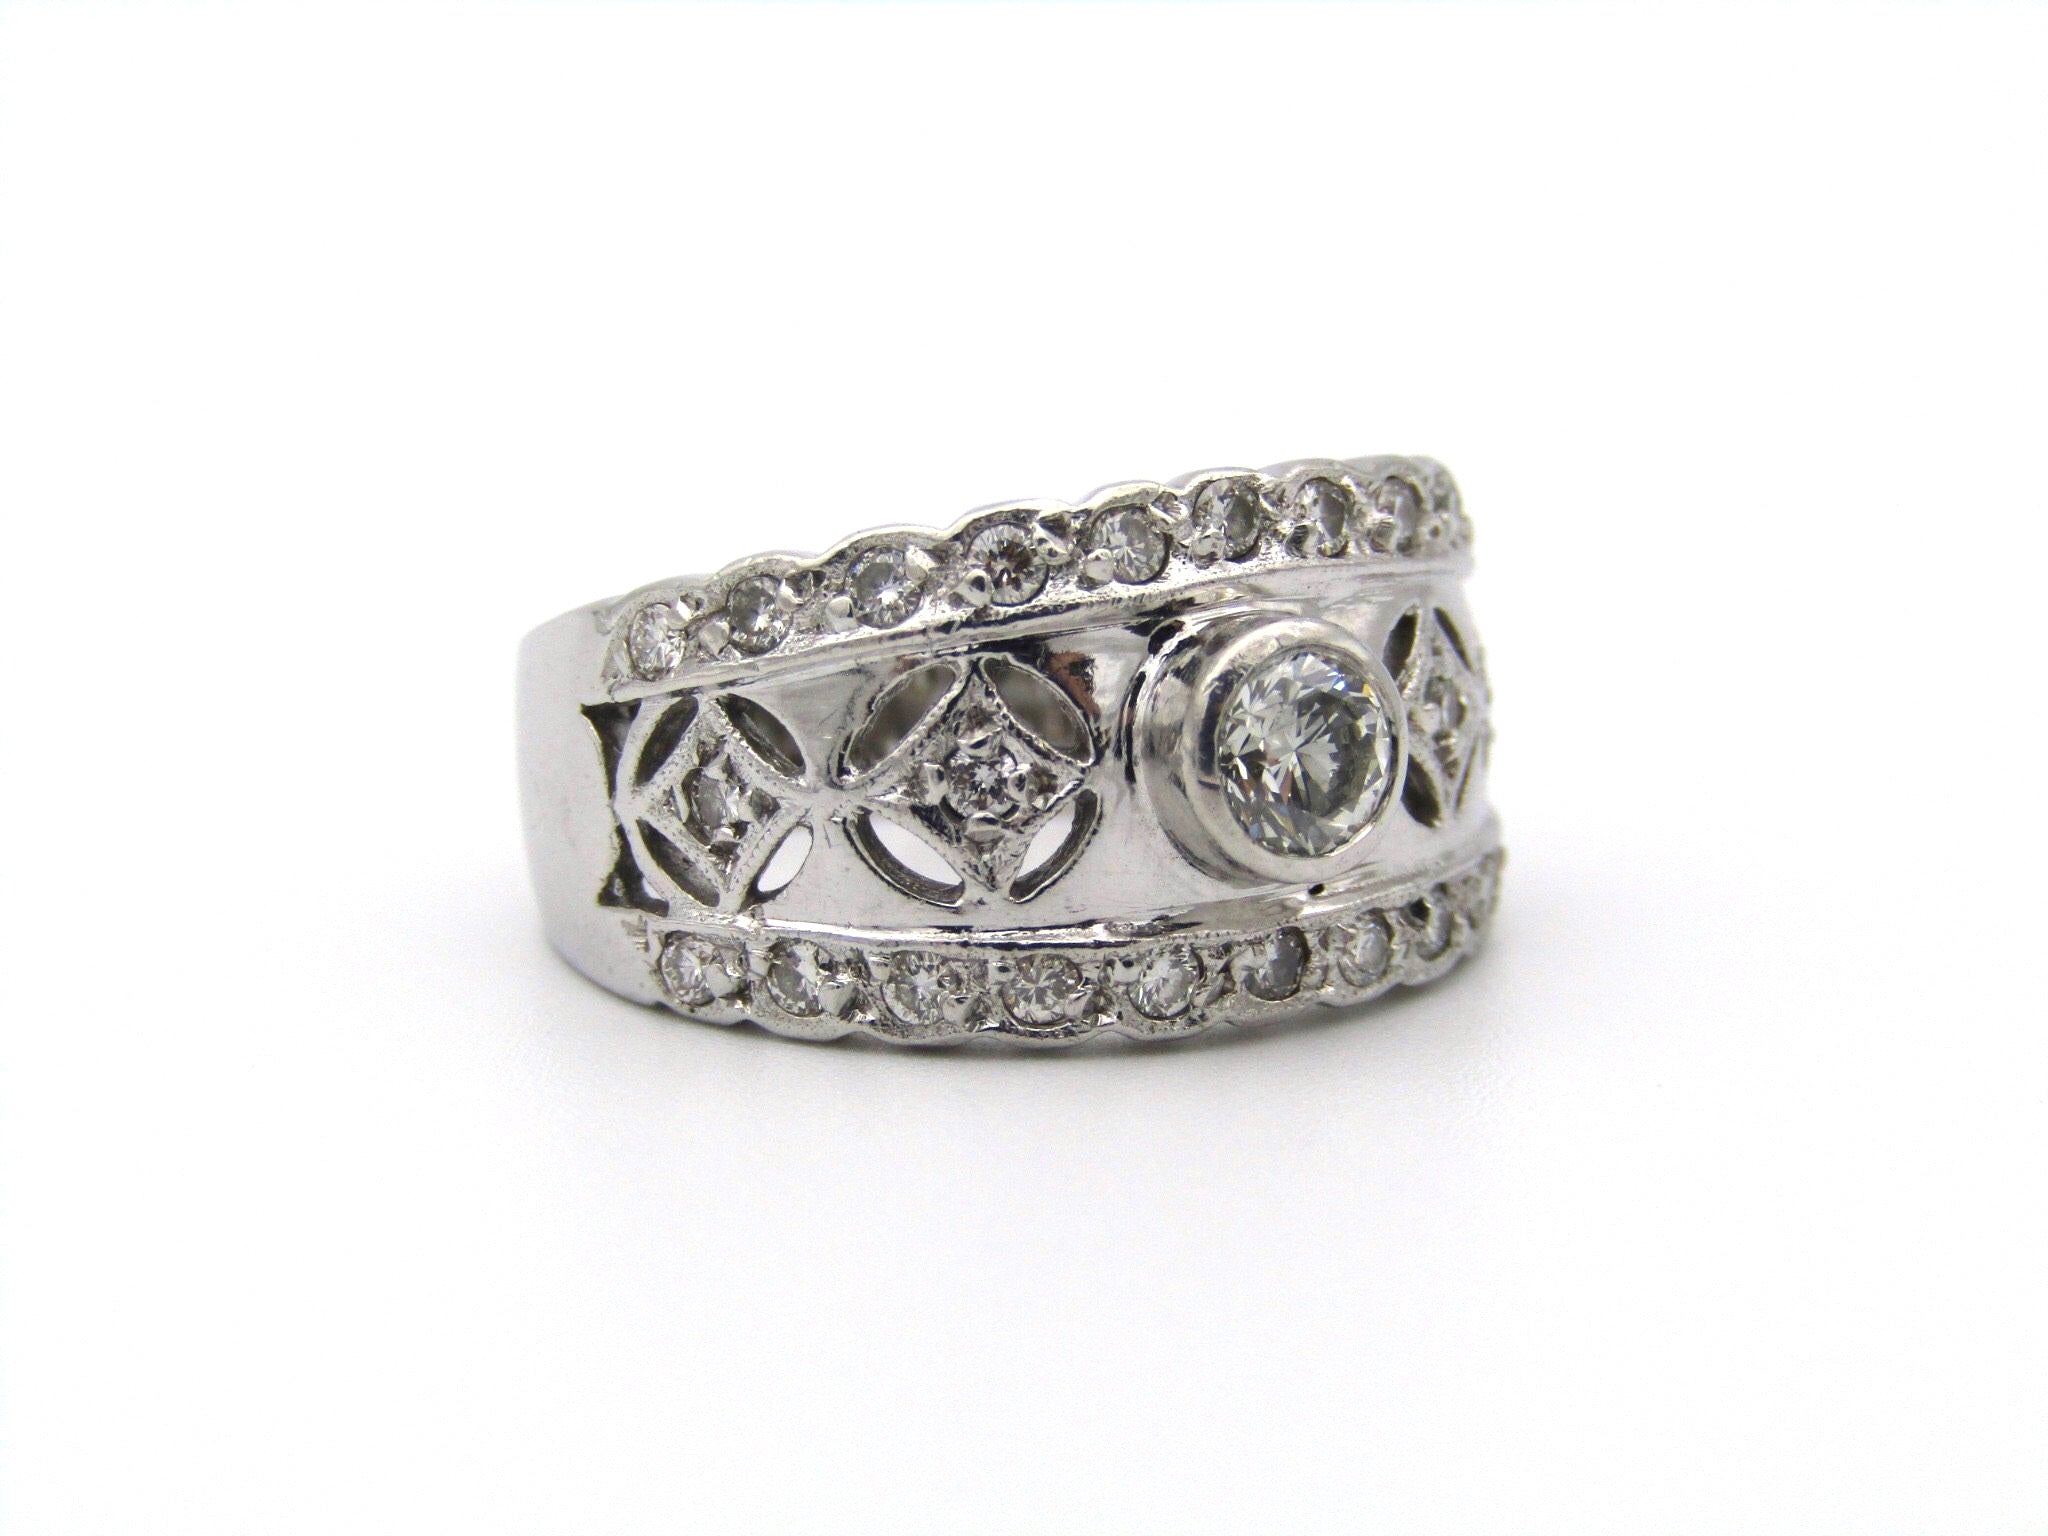 18kt gold diamond ring by Jenna Clifford.